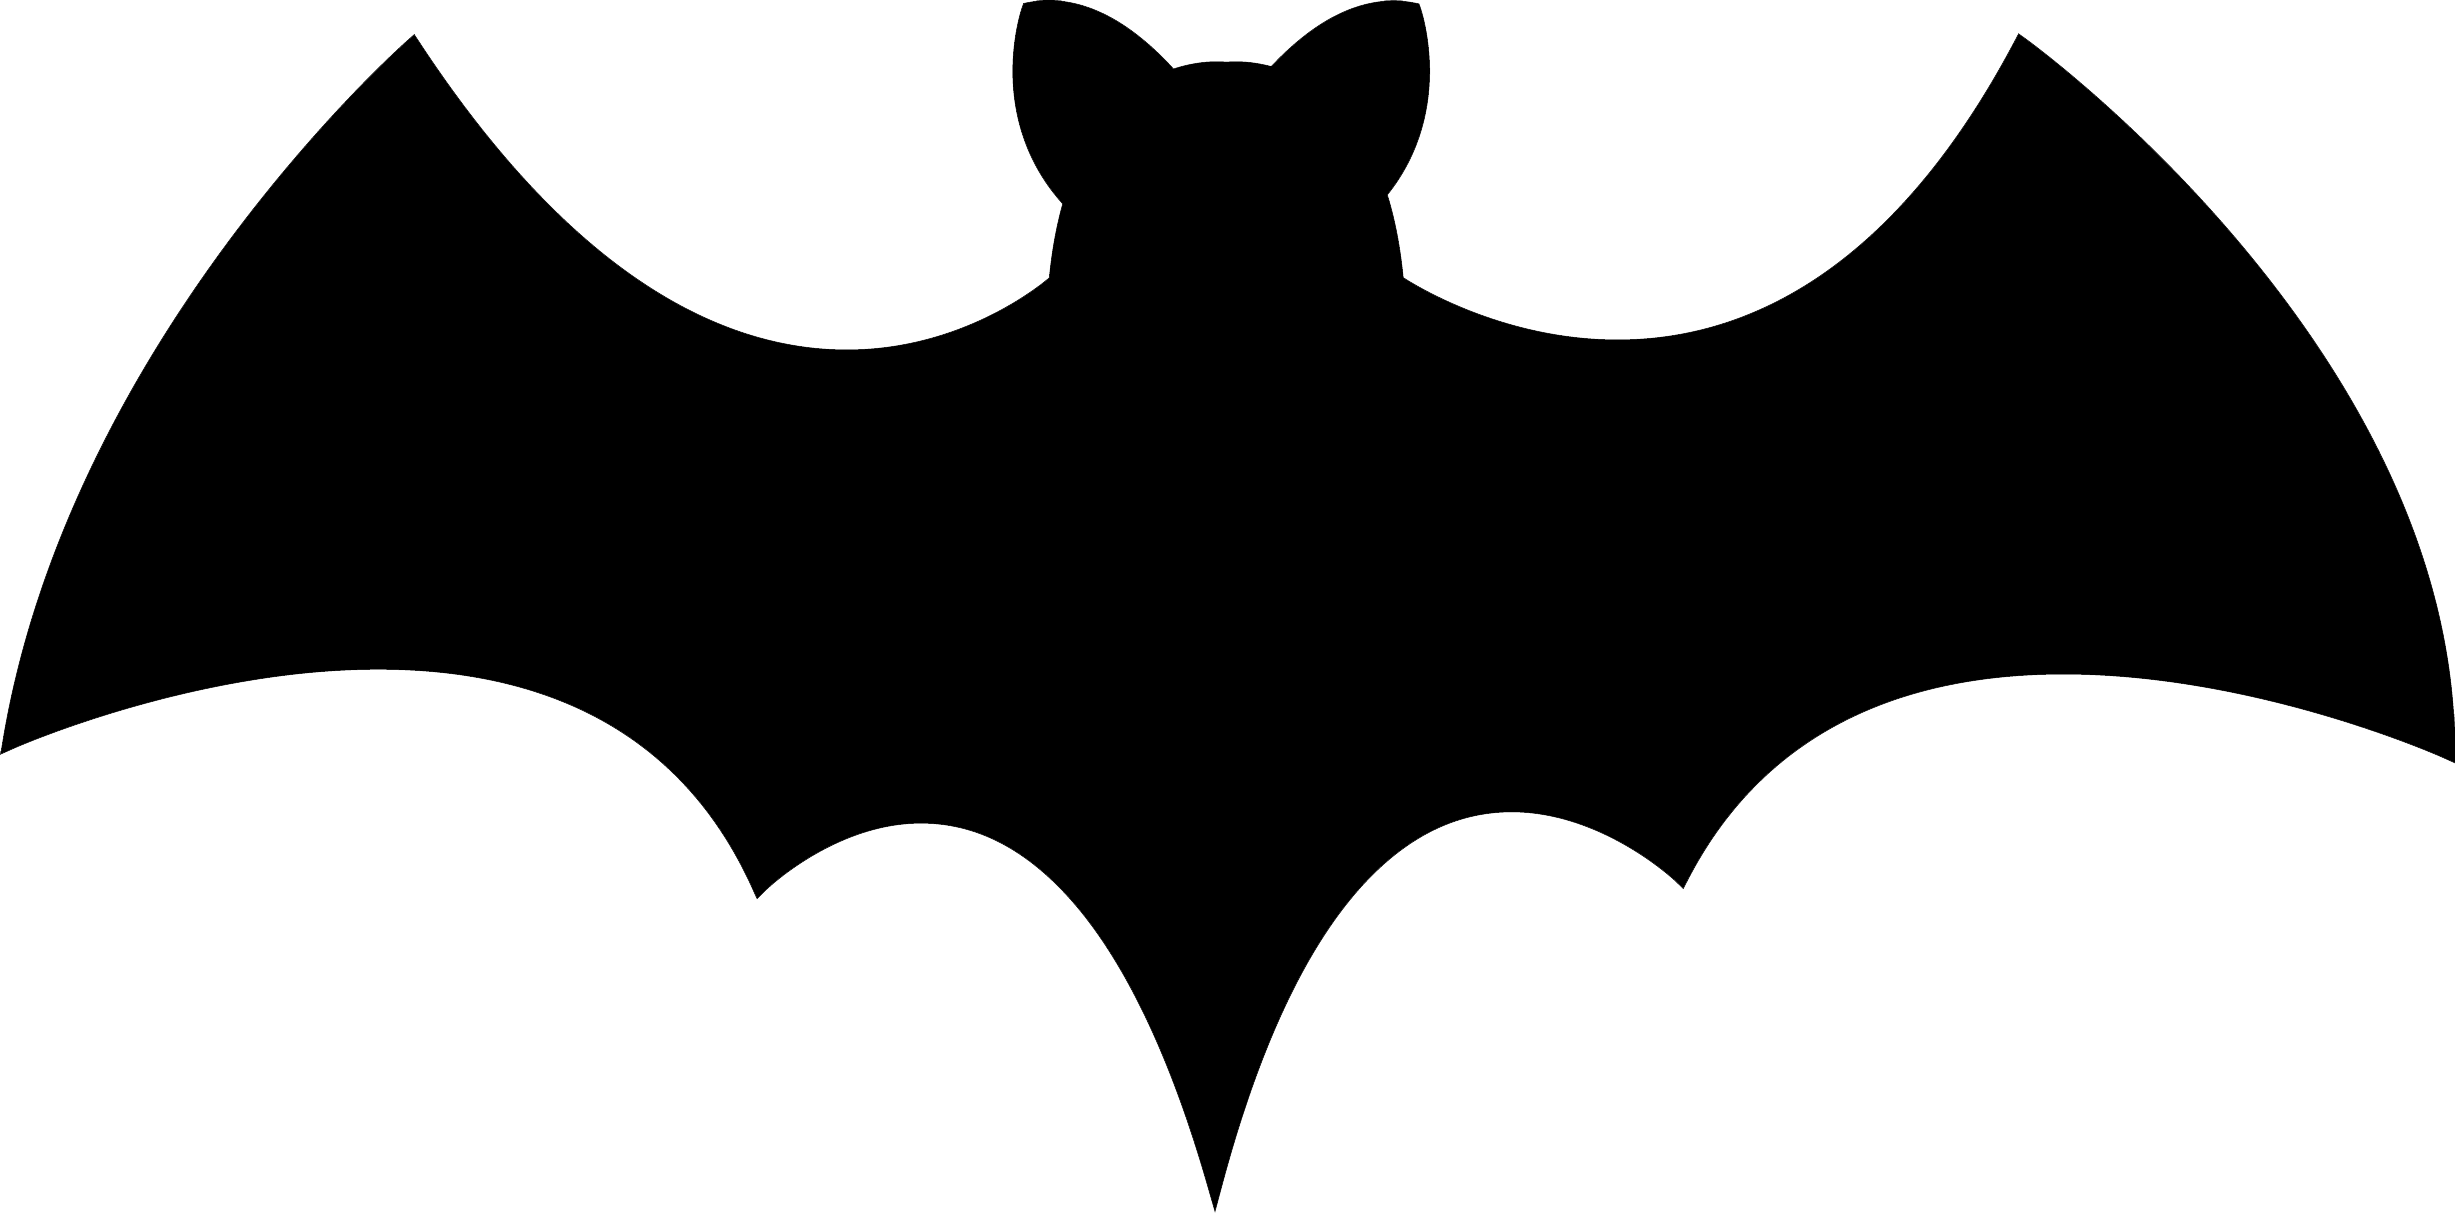 Bat Silhouette Images for Logo - Bat silhouette vector free stock pumpkin